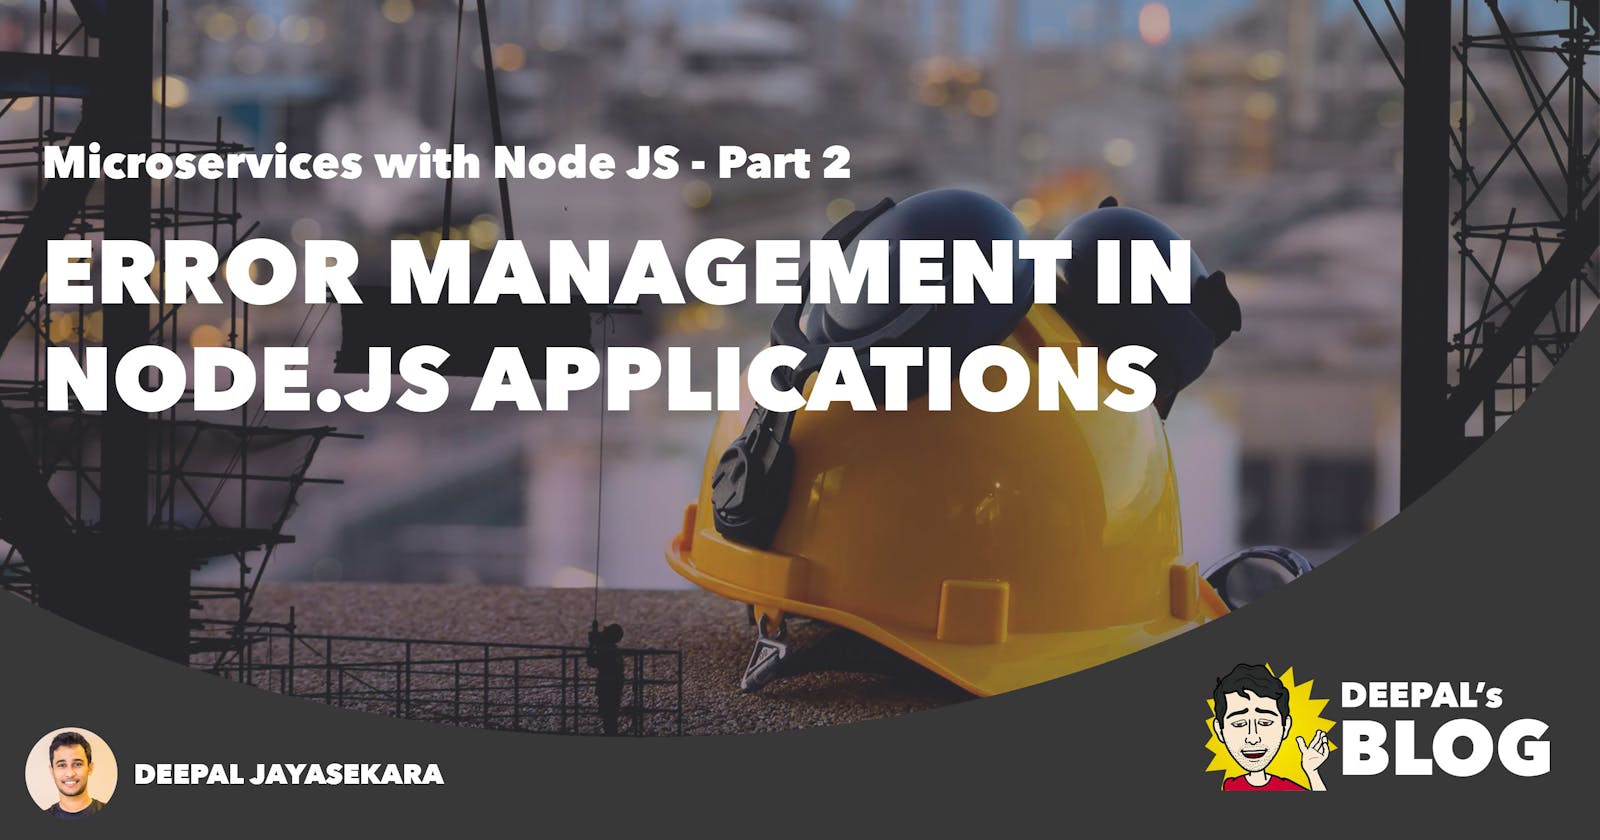 Error Management in Node.js Applications